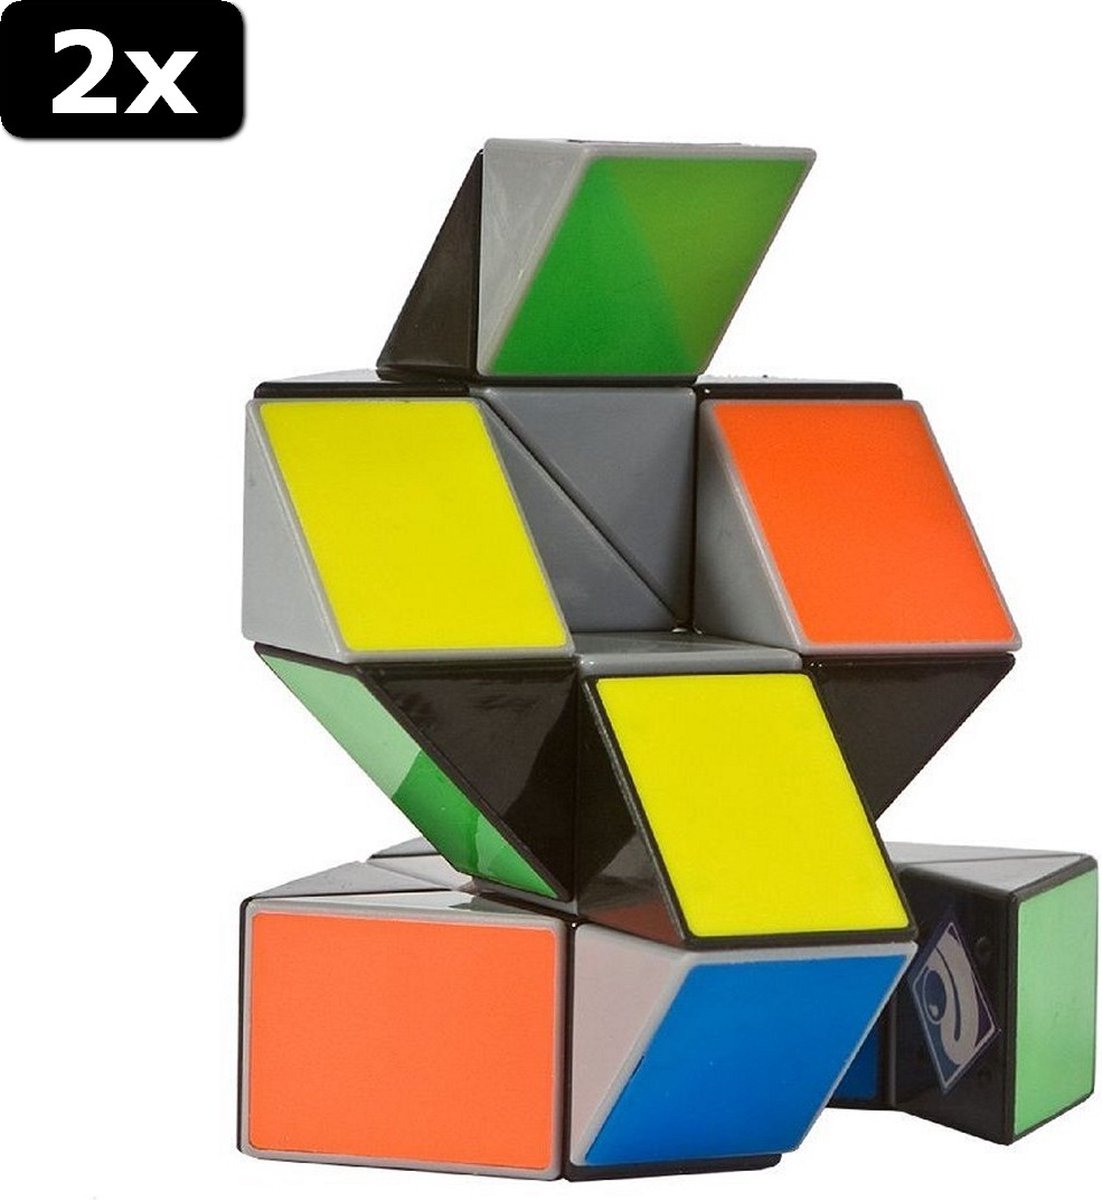 2x Clown Games Magic Puzzle Multicolor 24-delig